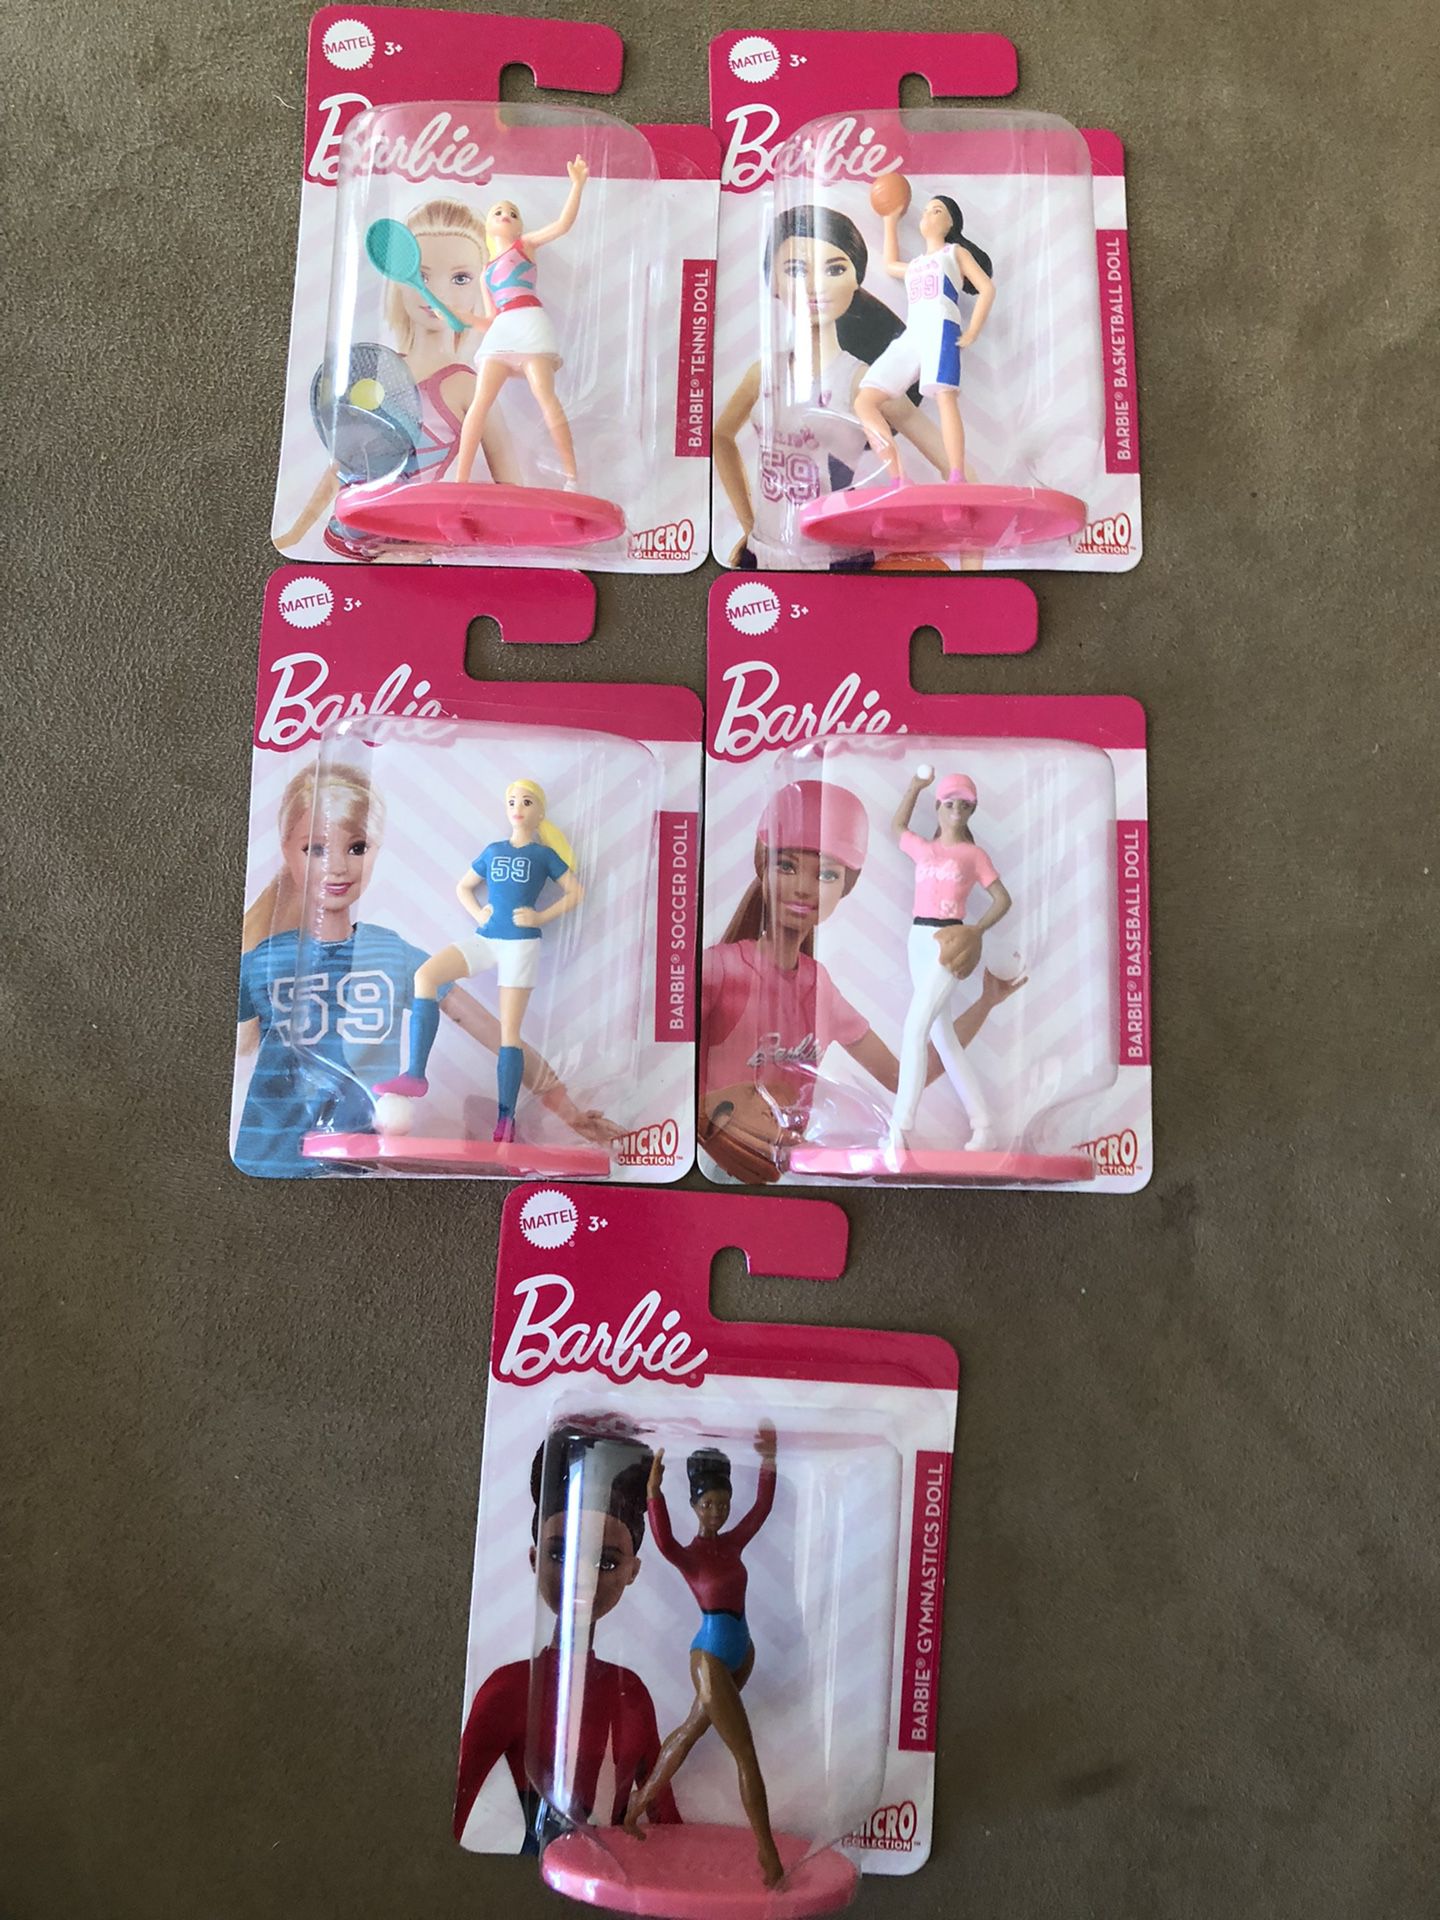 Barbie athletic girl figurines